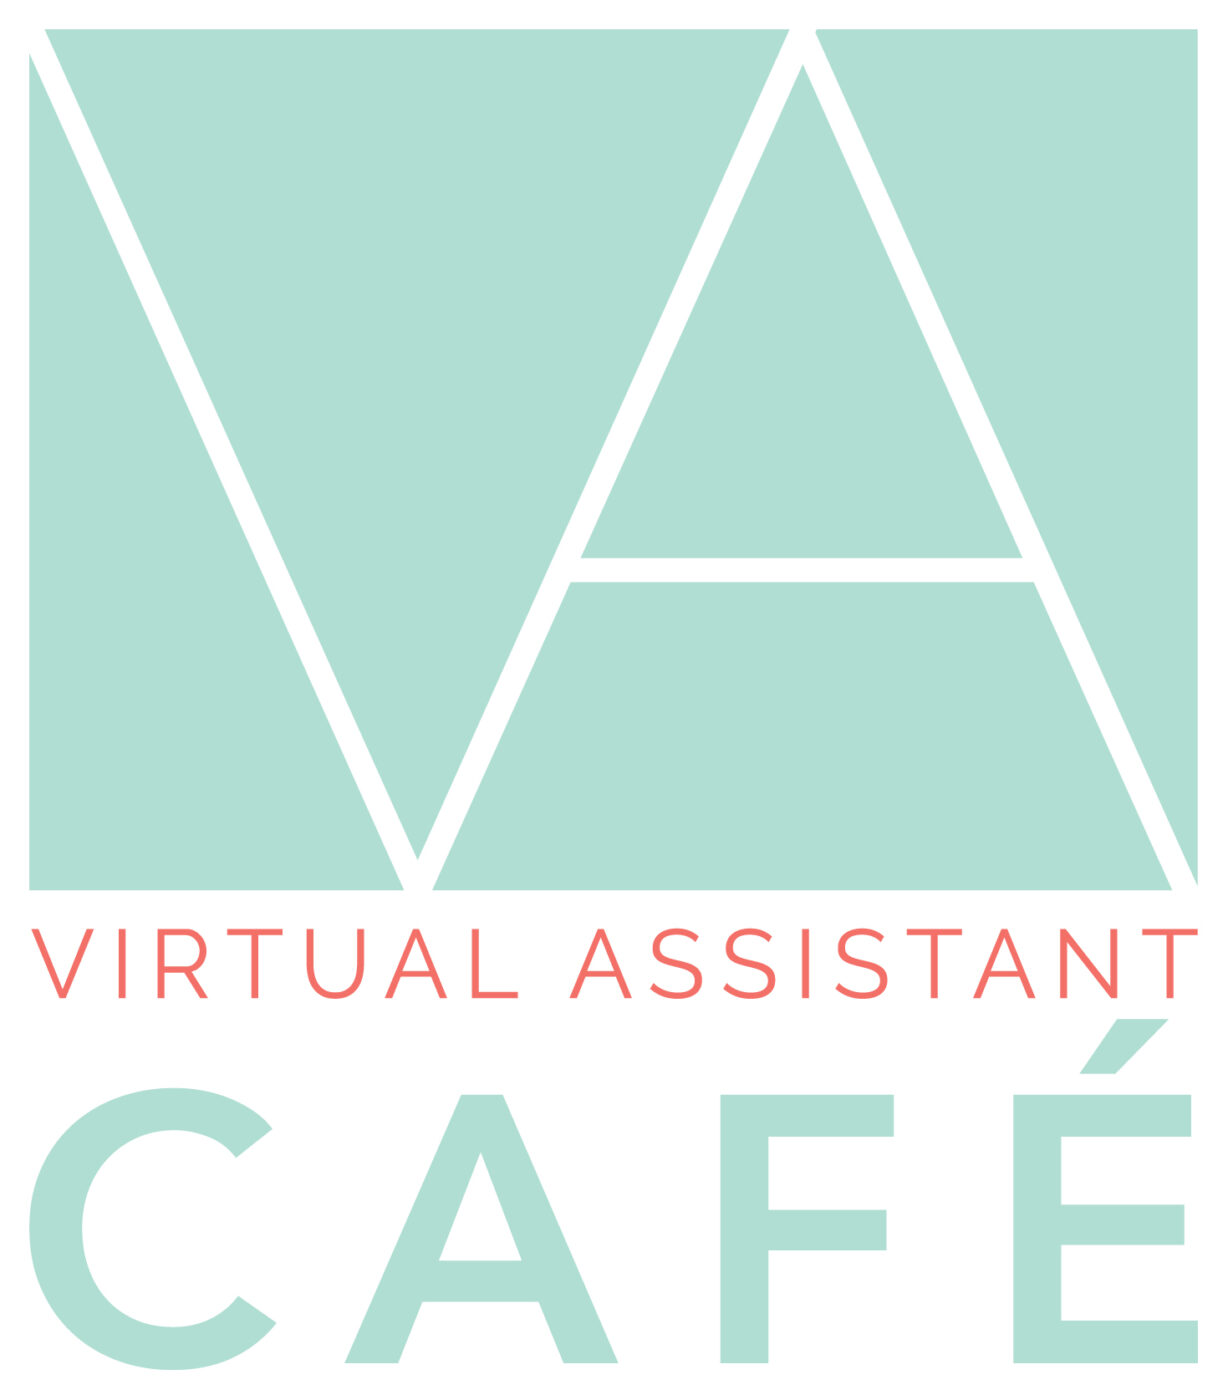 VA cafe logo